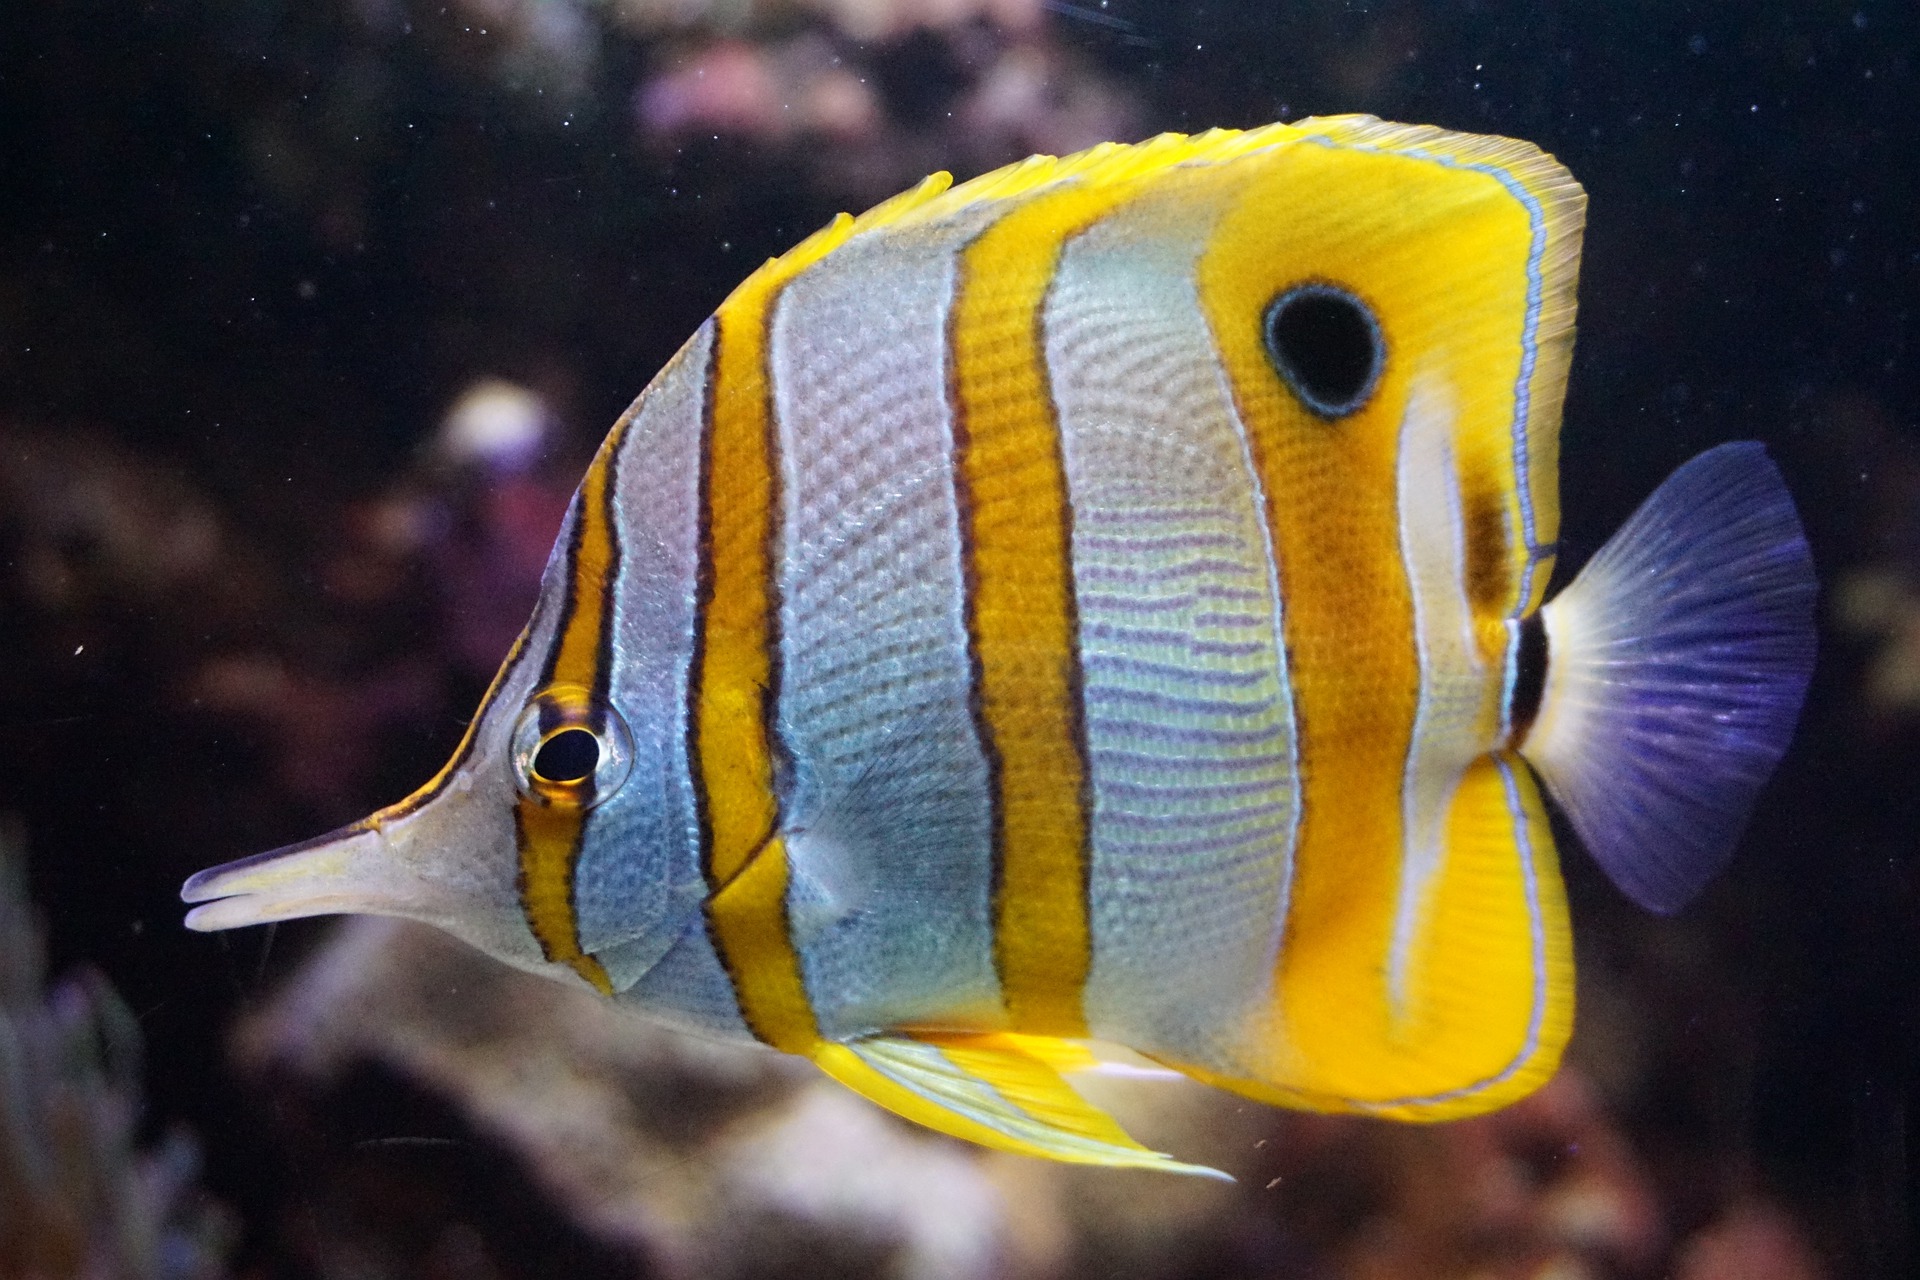 fourspot butterflyfish